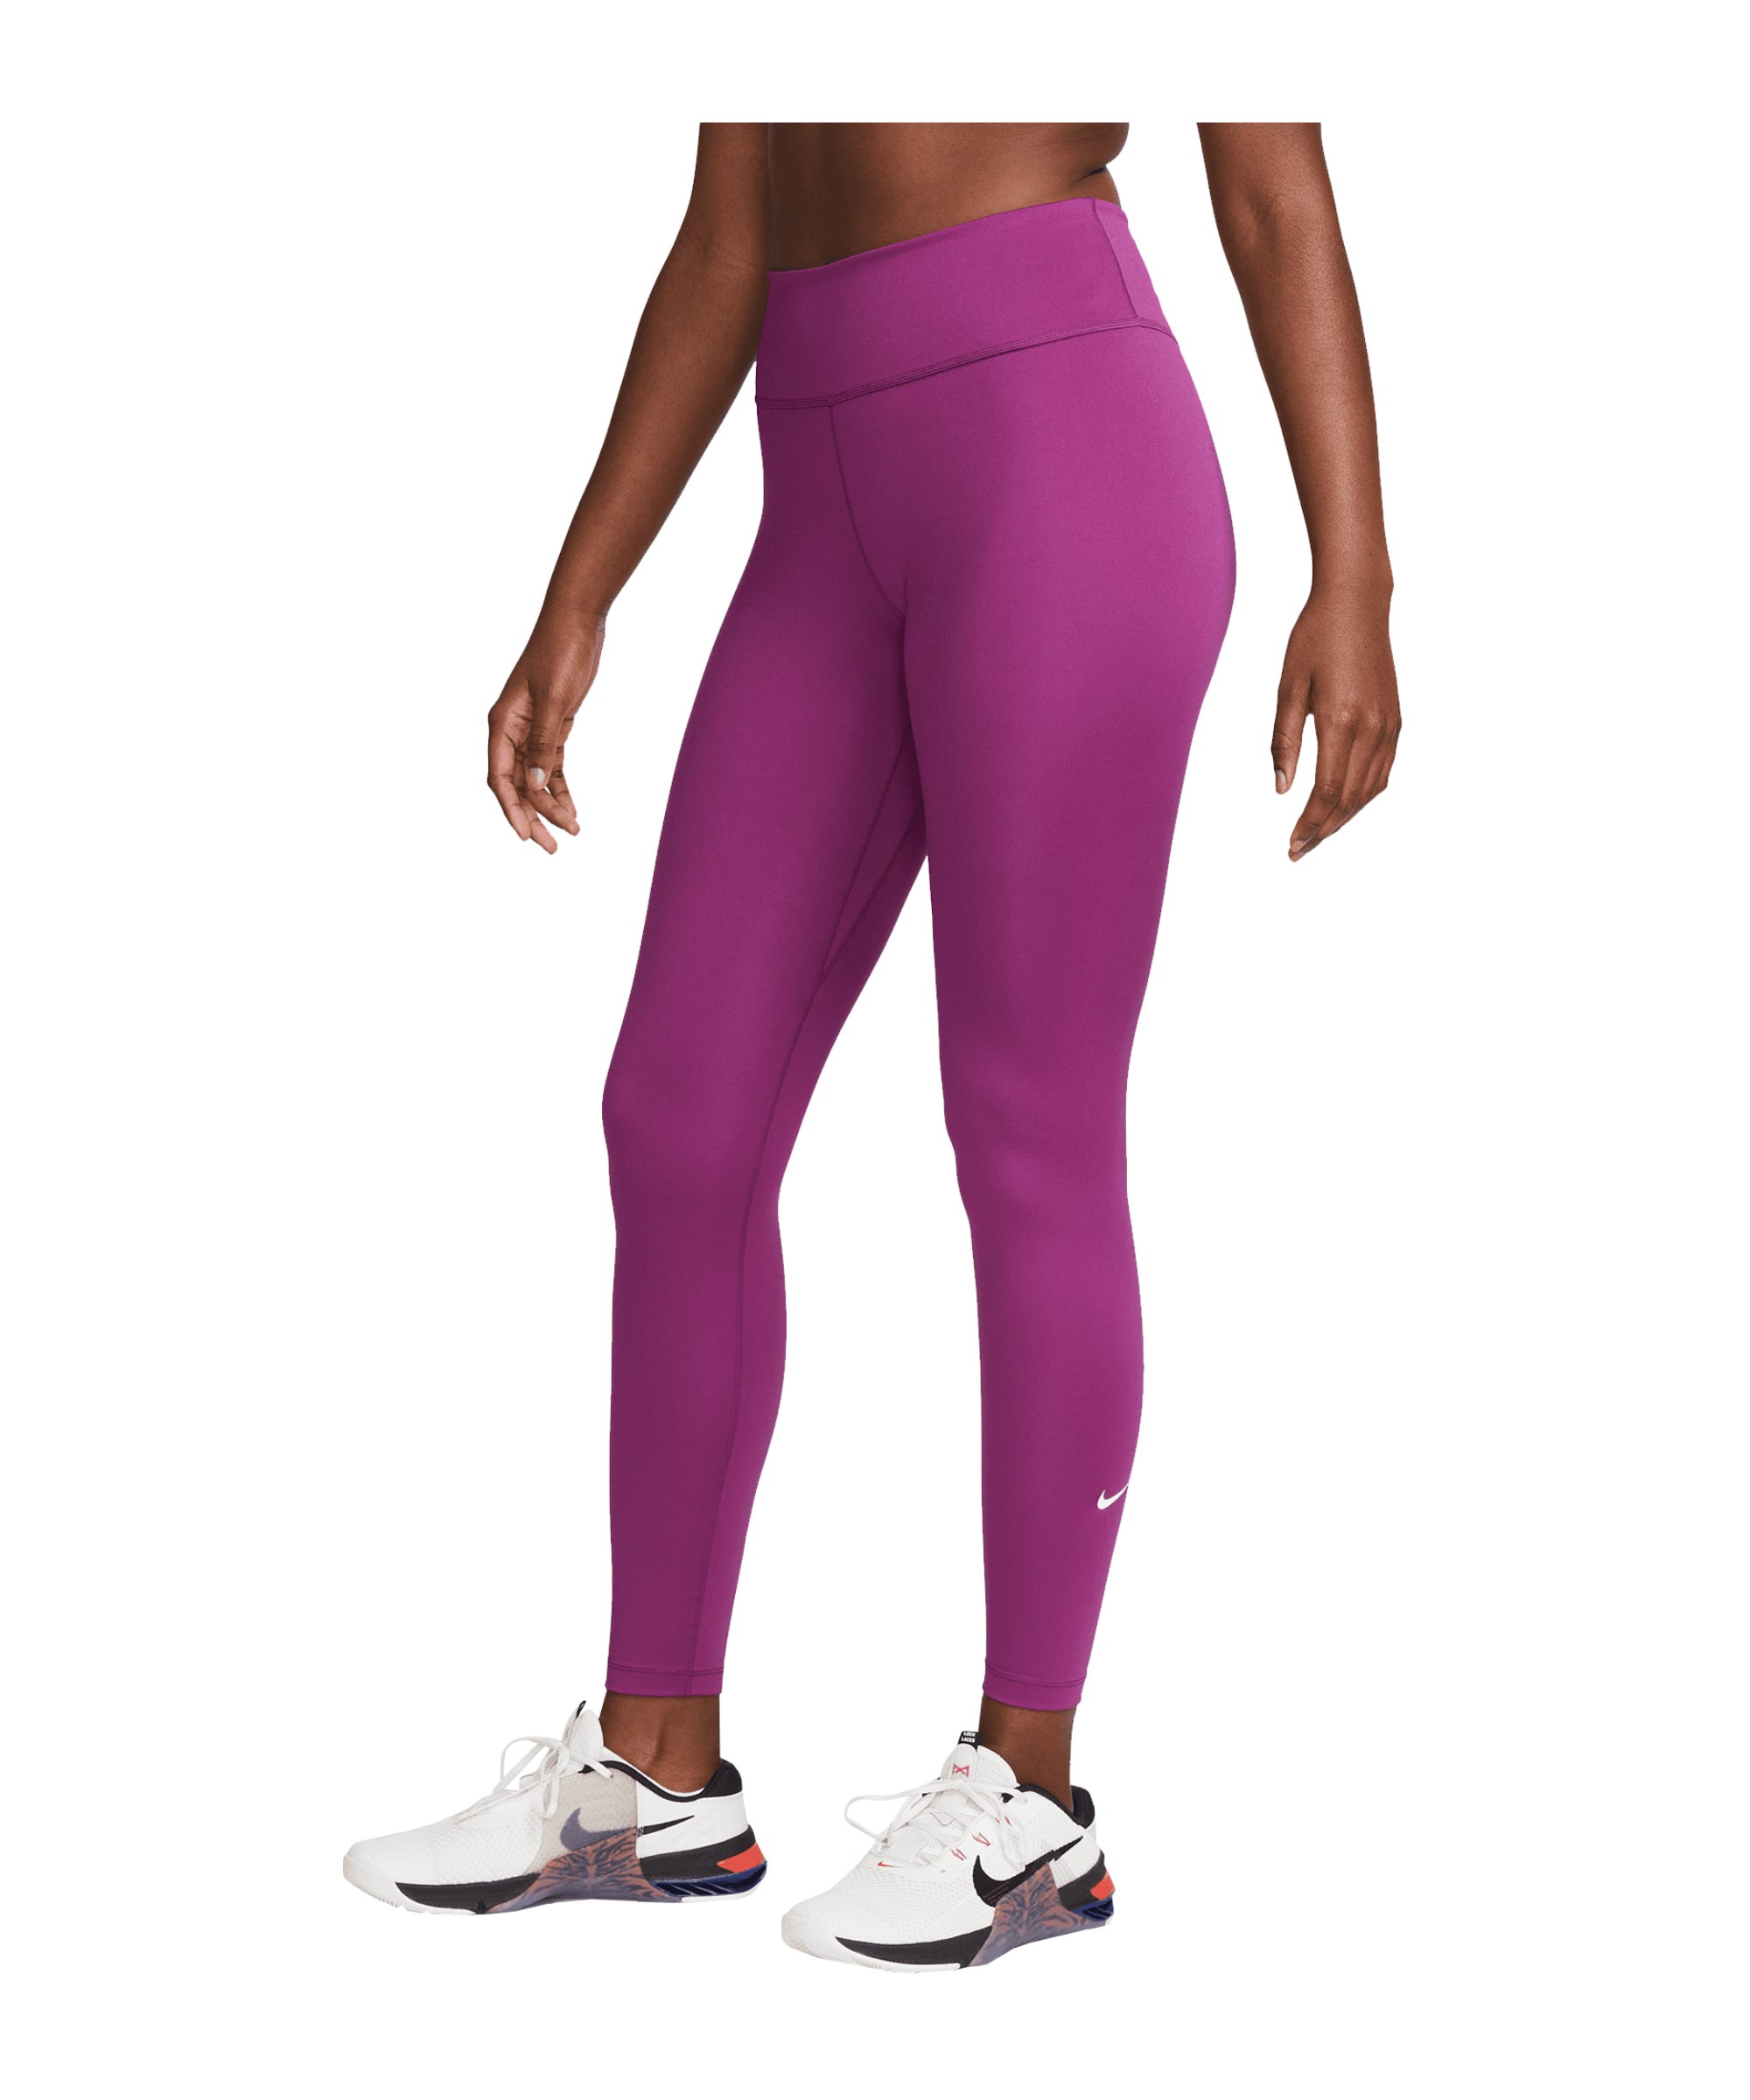 Nike One Leggings Training Damen mehrfarbig F503 - mehrfarbig